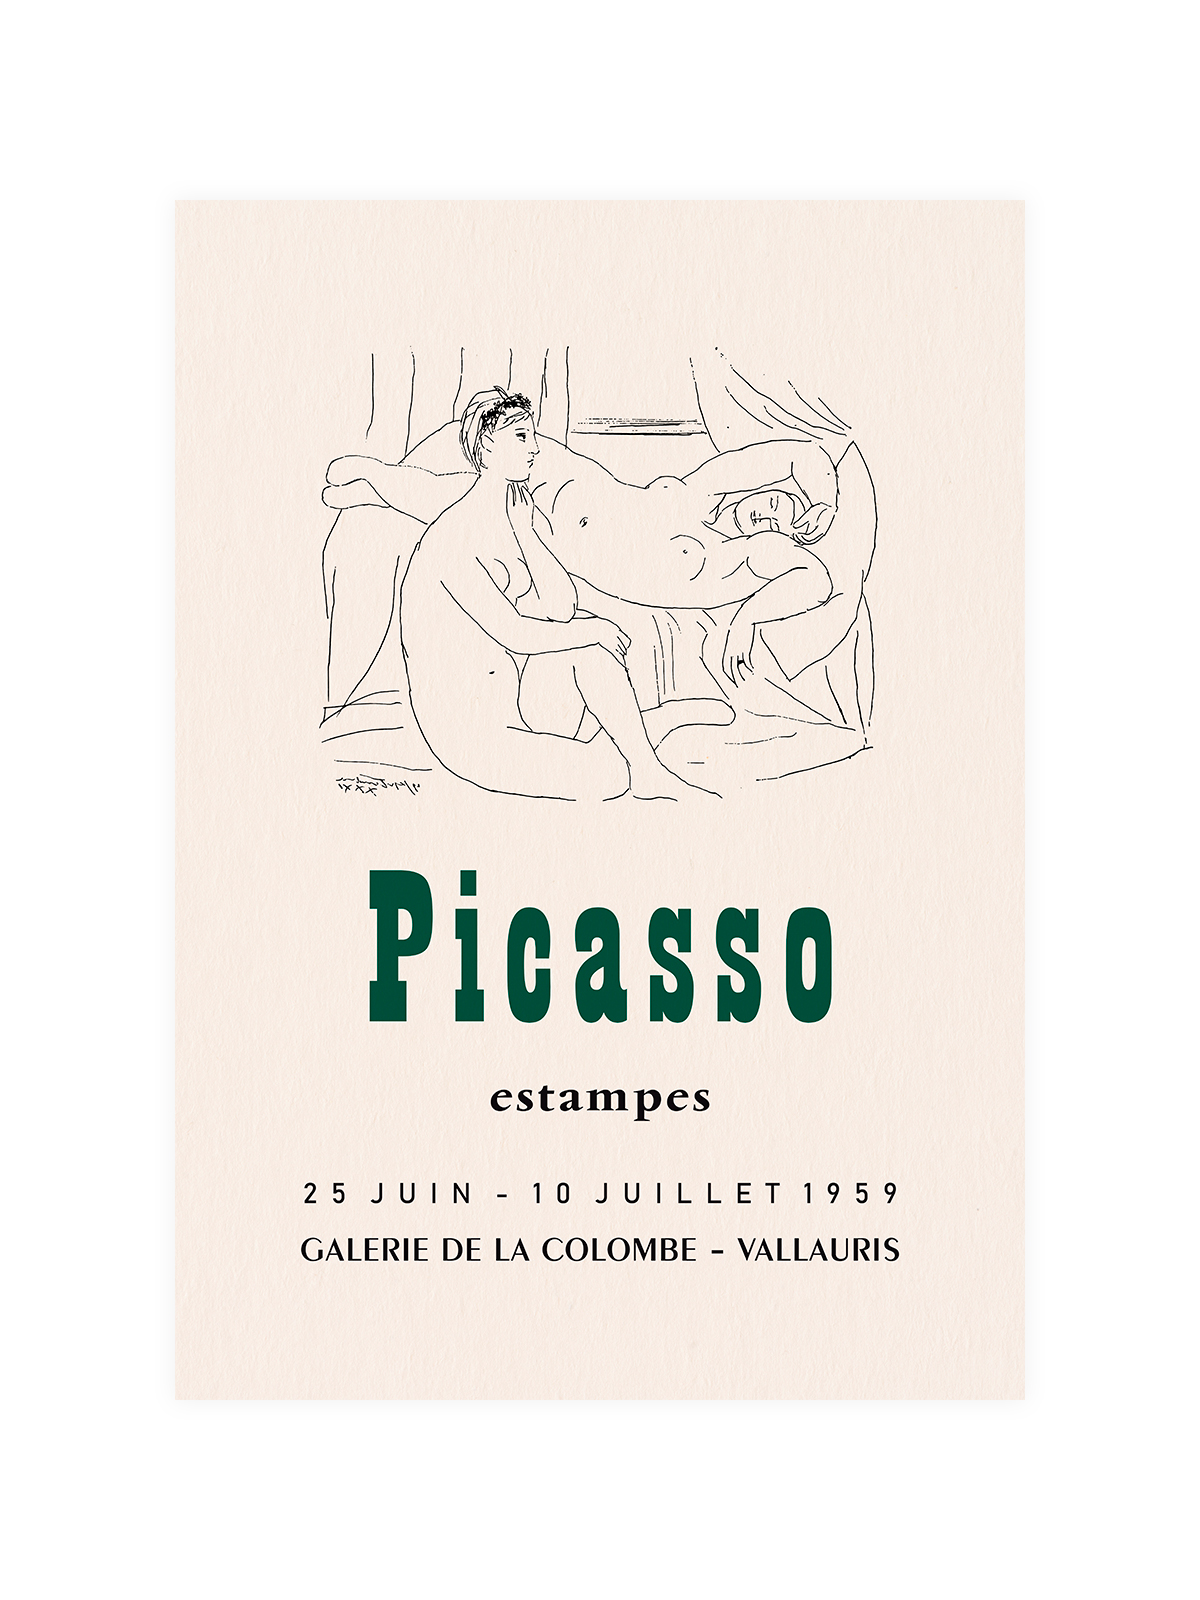 Picasso Estampes Exhibition Poster